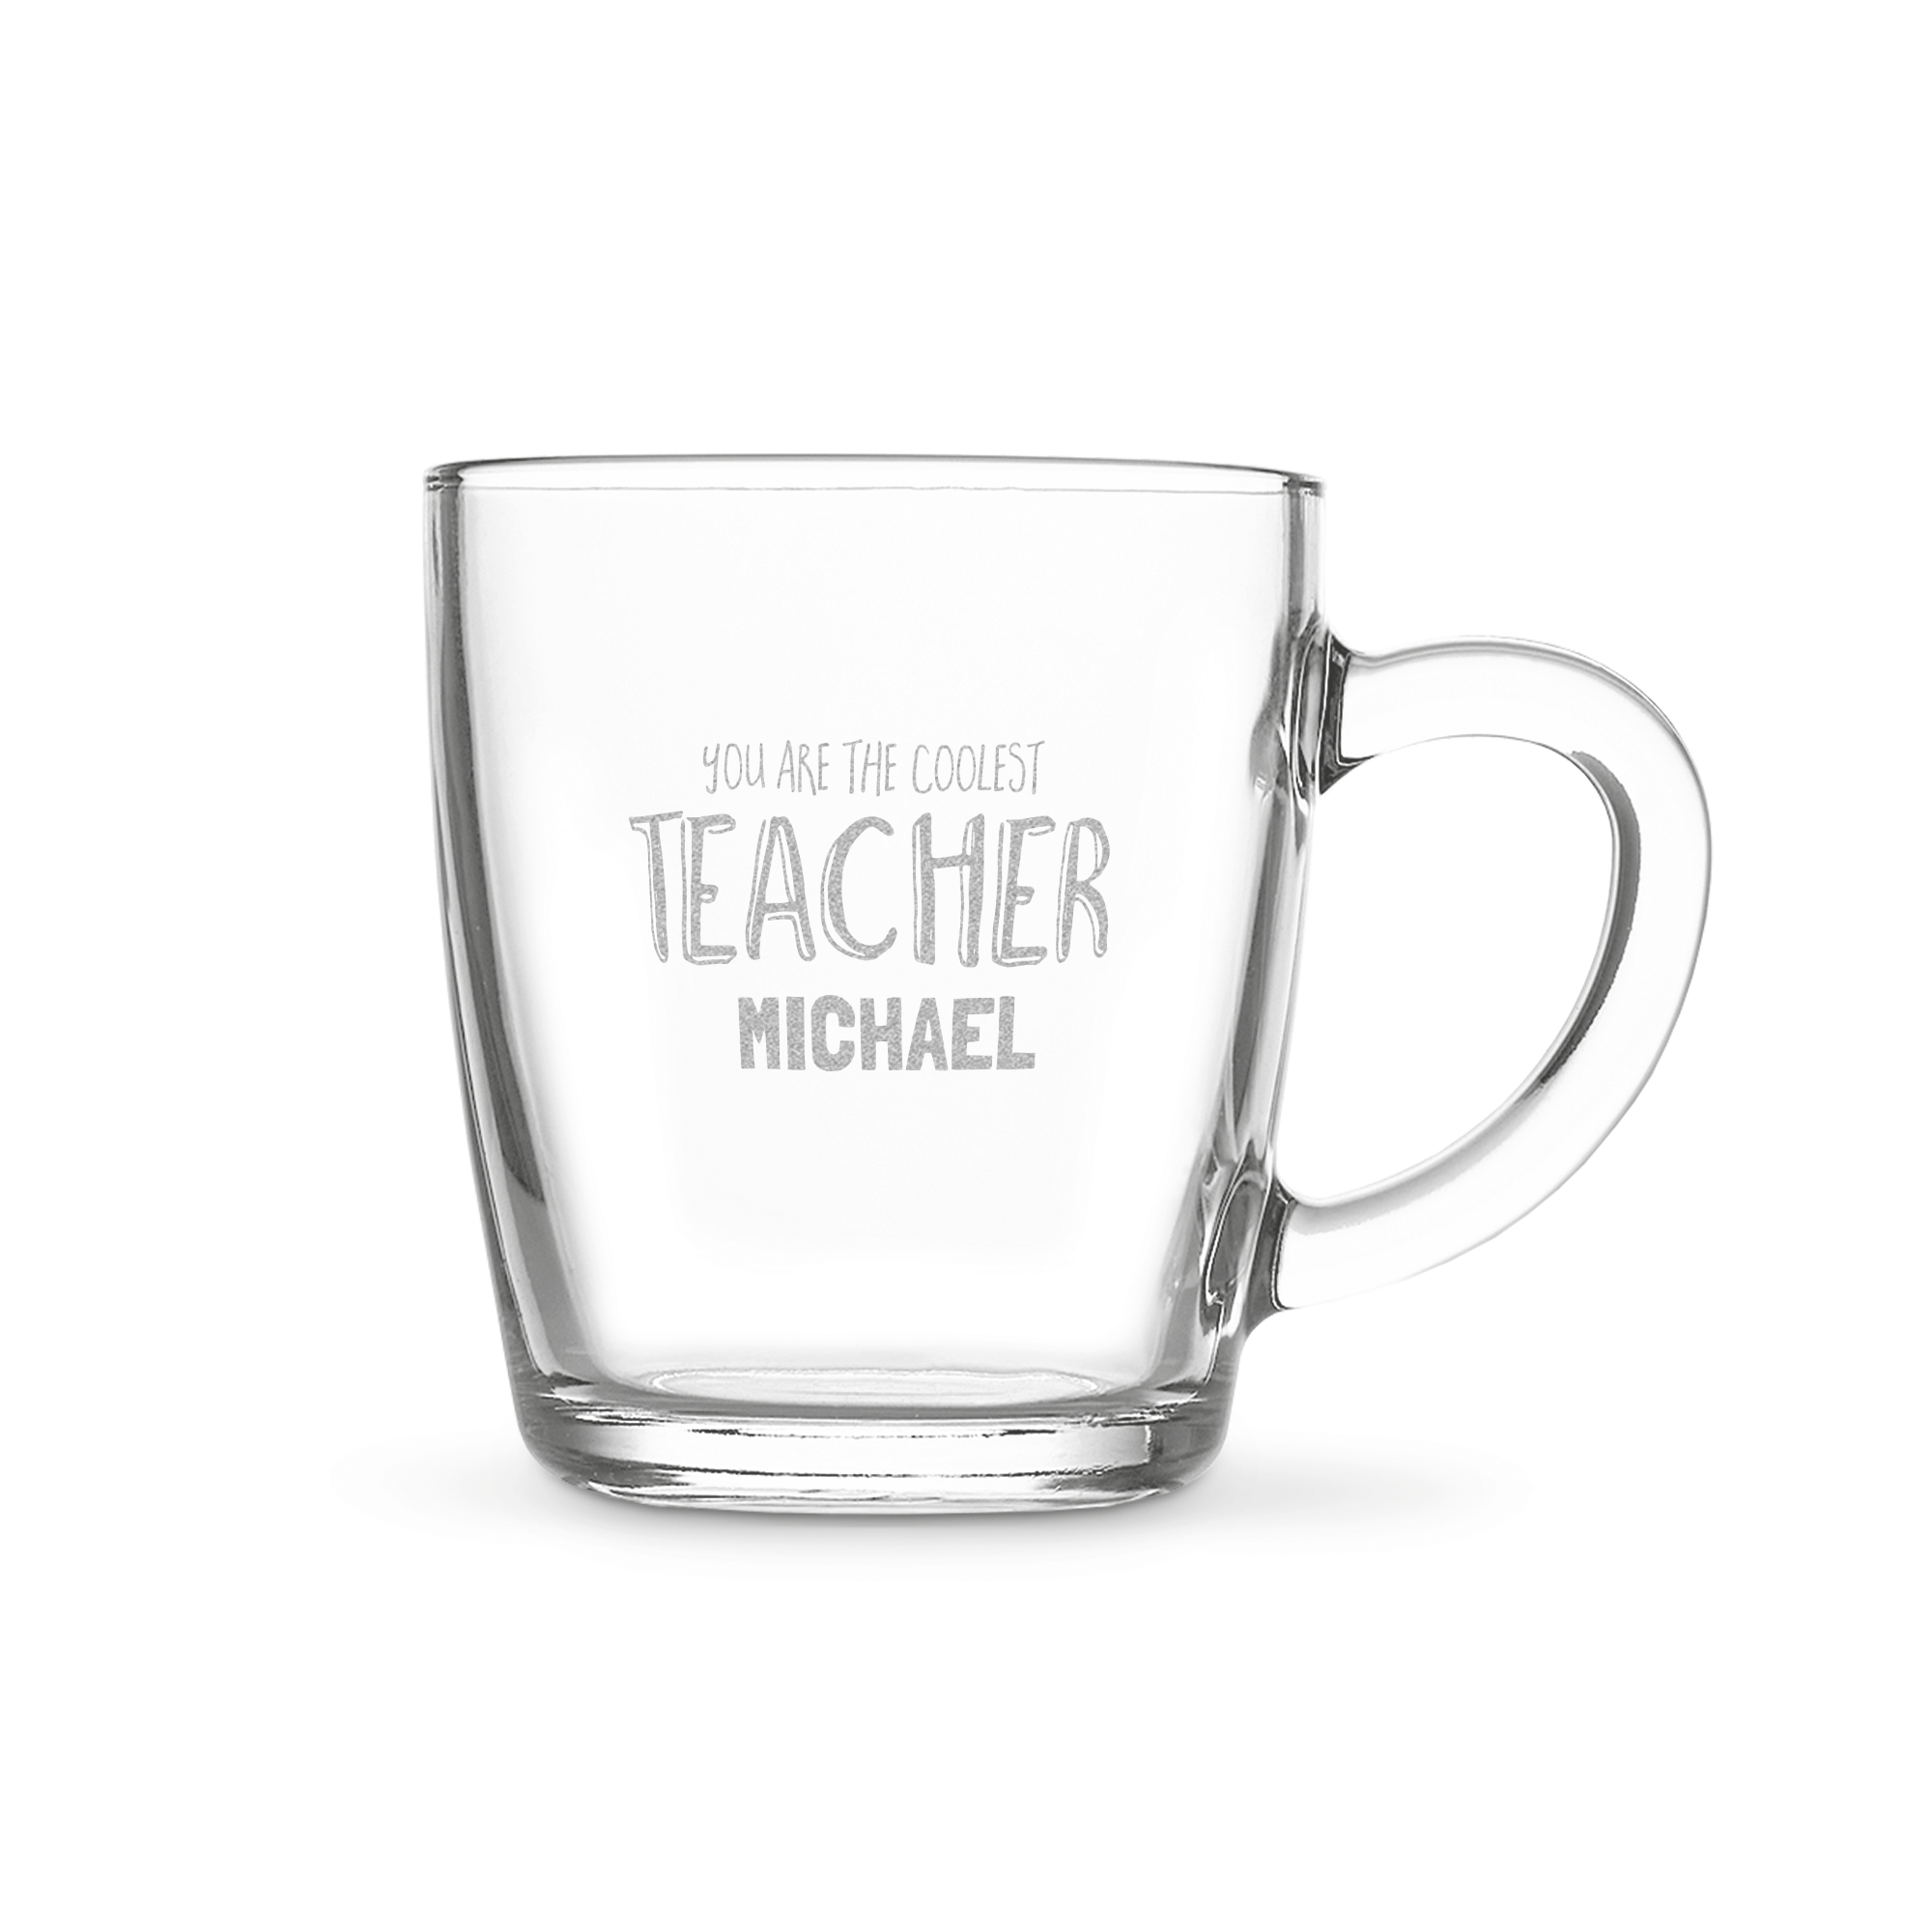 Personalised glass mug - Teacher - Engraved - 2 pcs